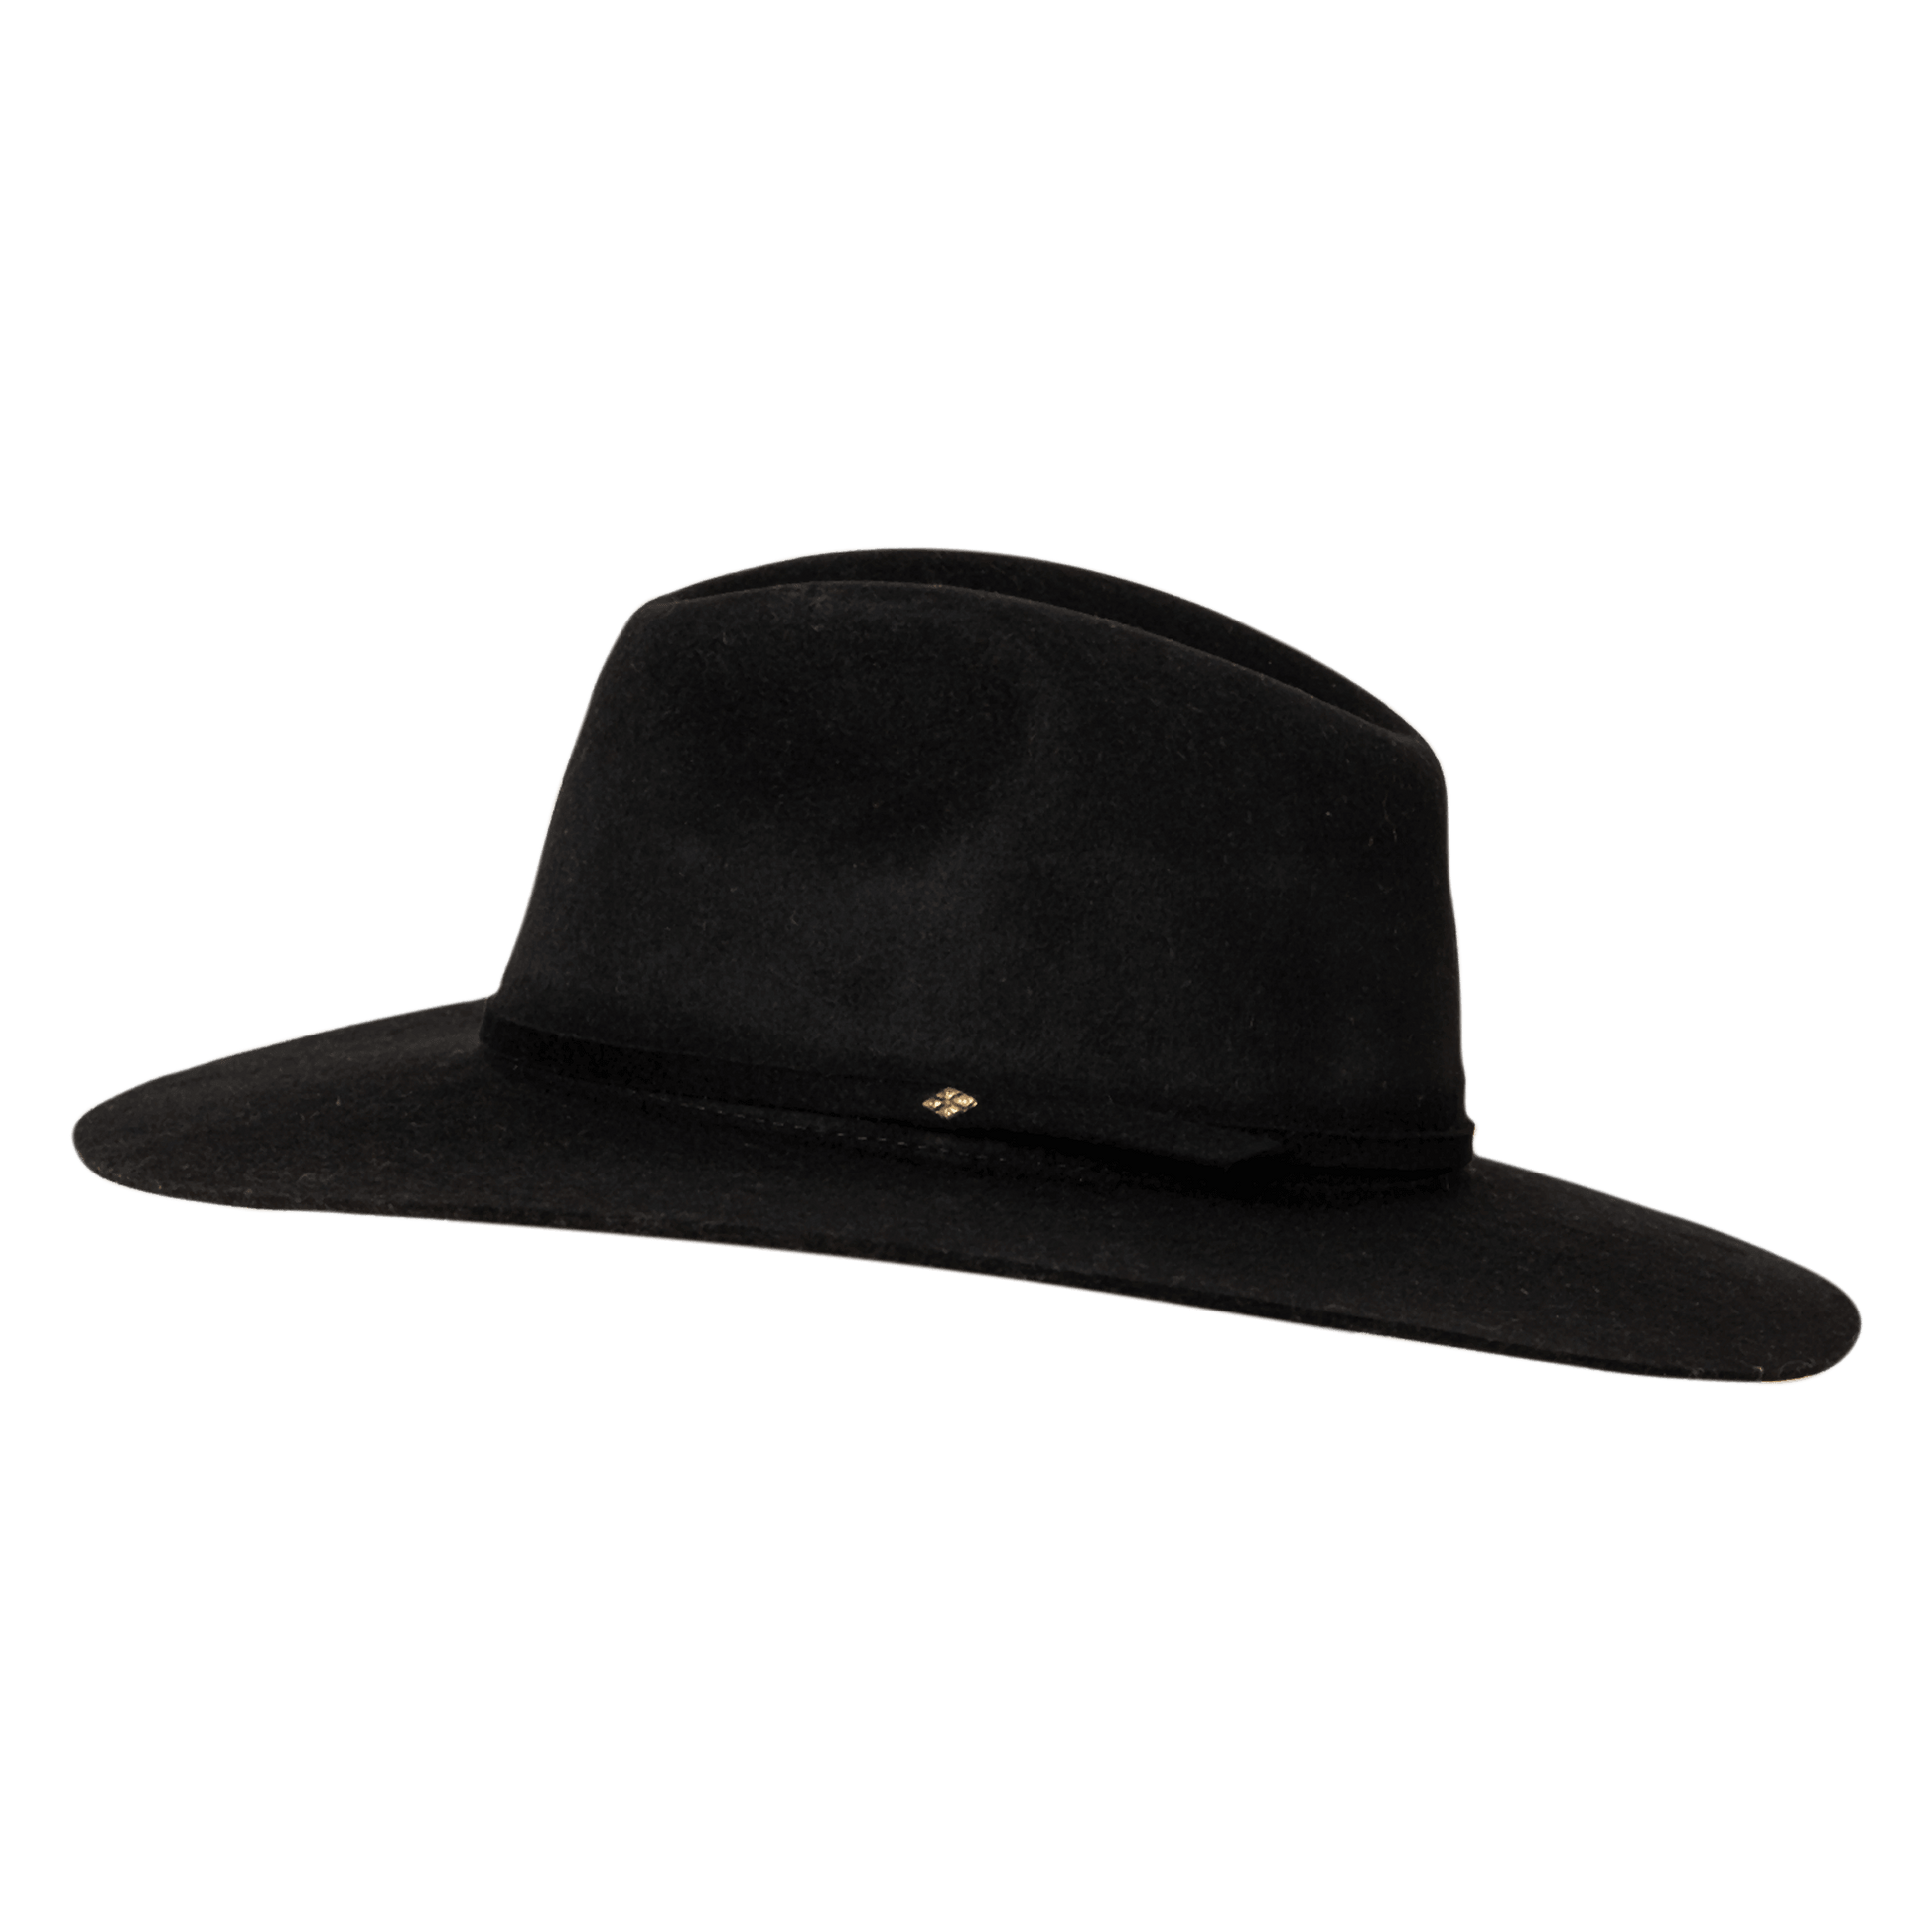    Sombrero-fedora-fieltro-negro-vista-lateral